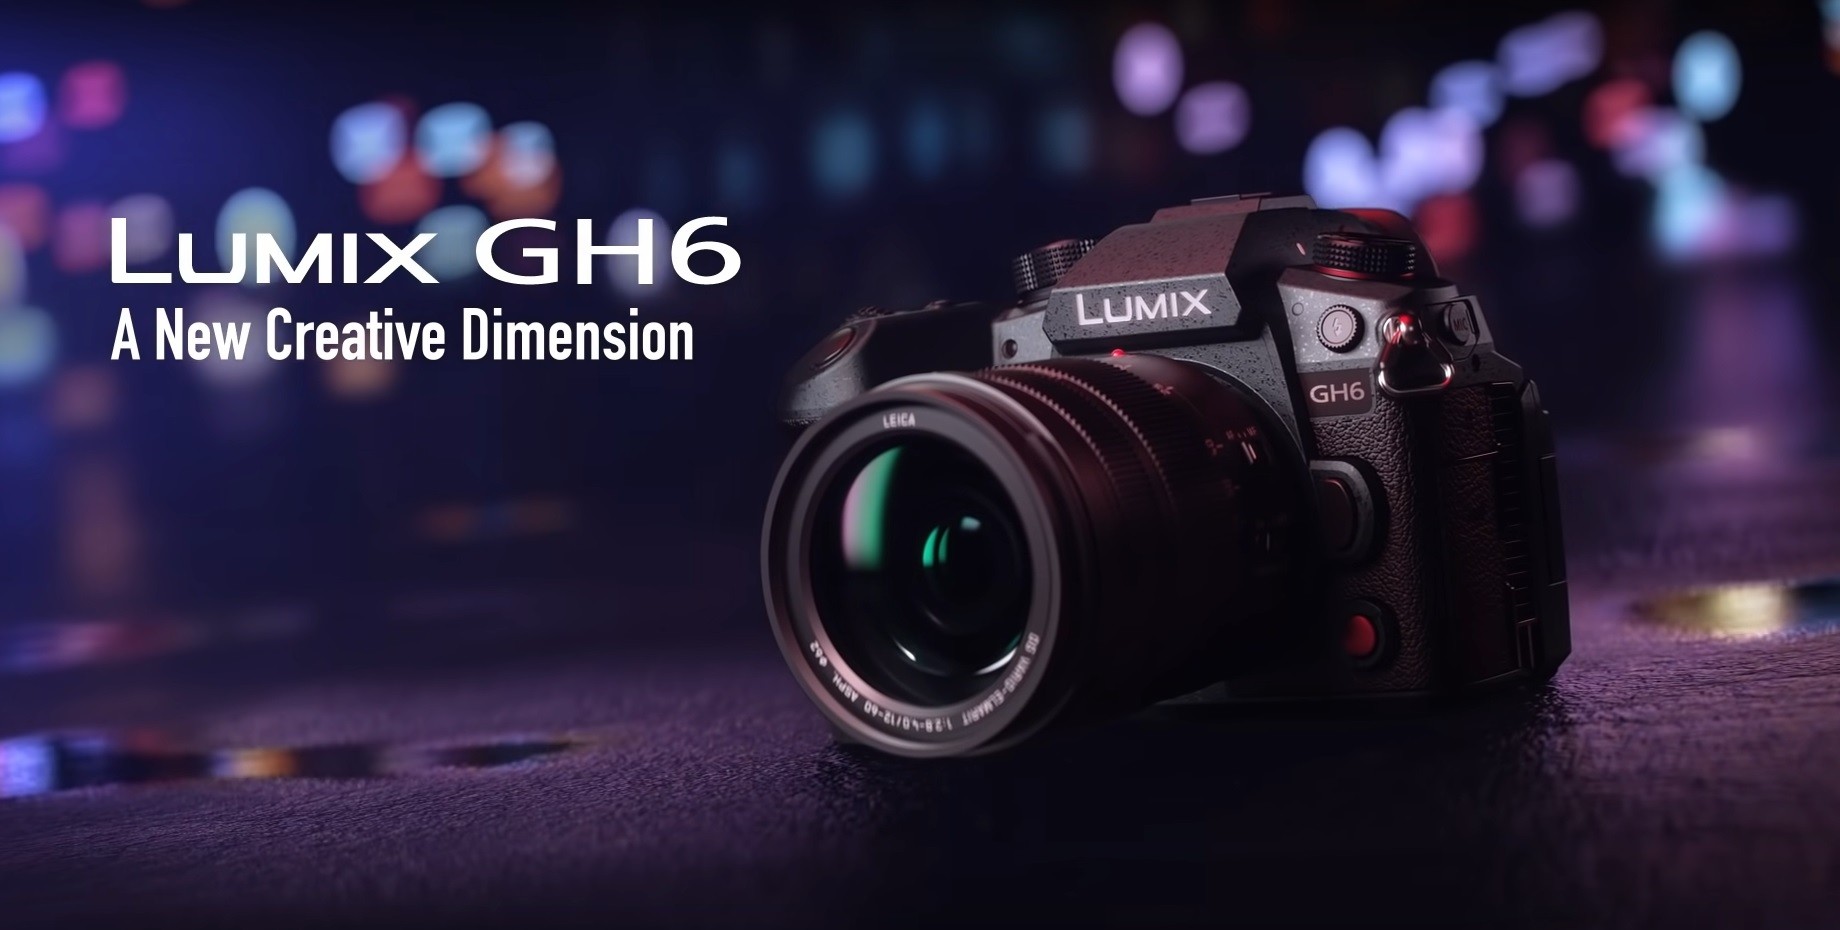 Save $500 on the Panasonic Lumix GH6 Mirrorless Camera